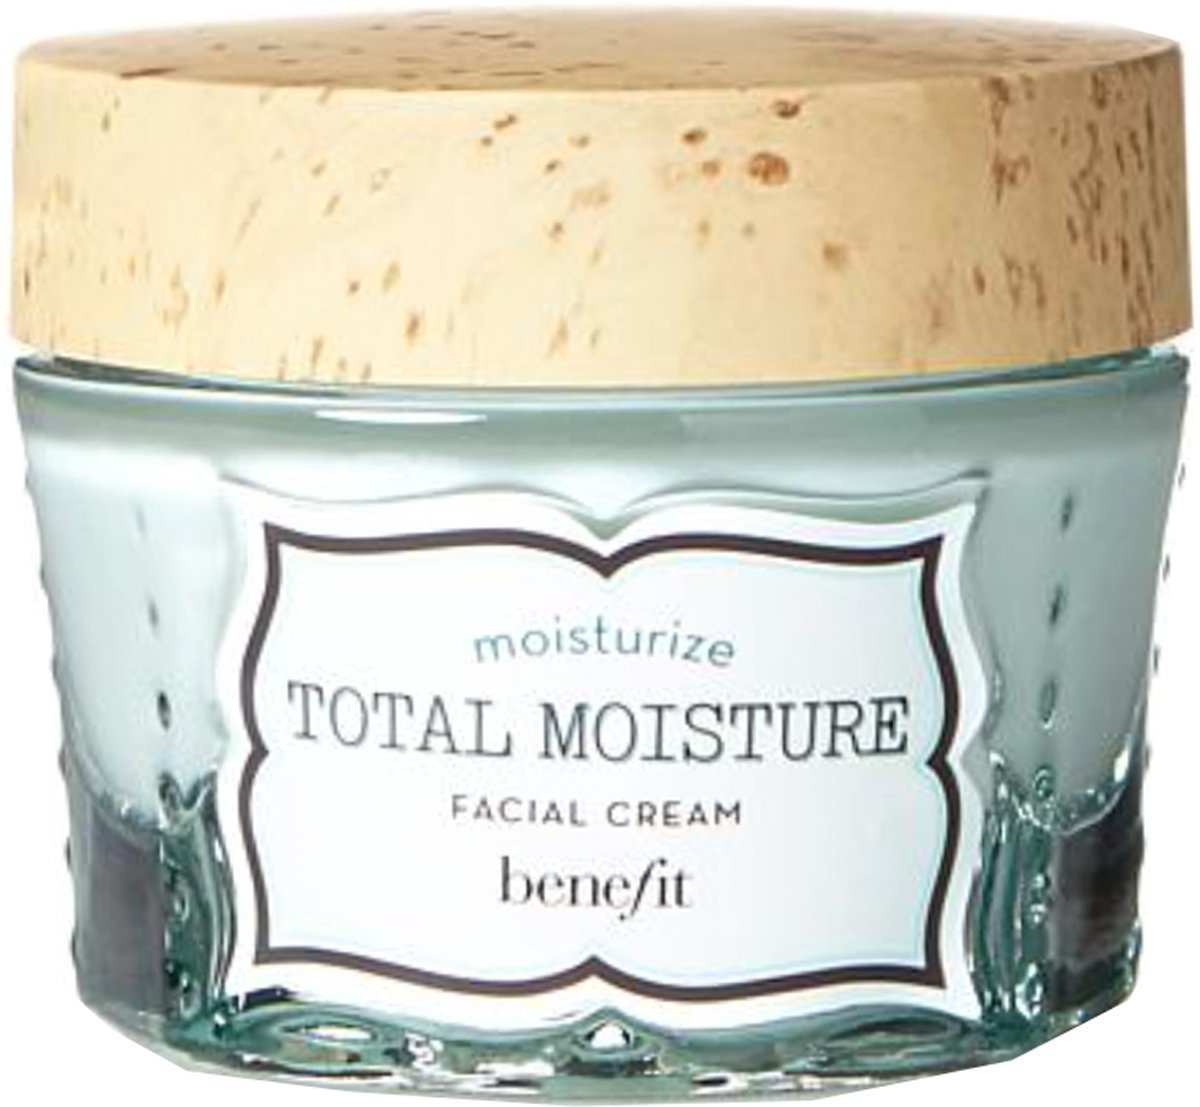 Benefit Cosmetics - Total Moisture Facial Cream 1.7 oz